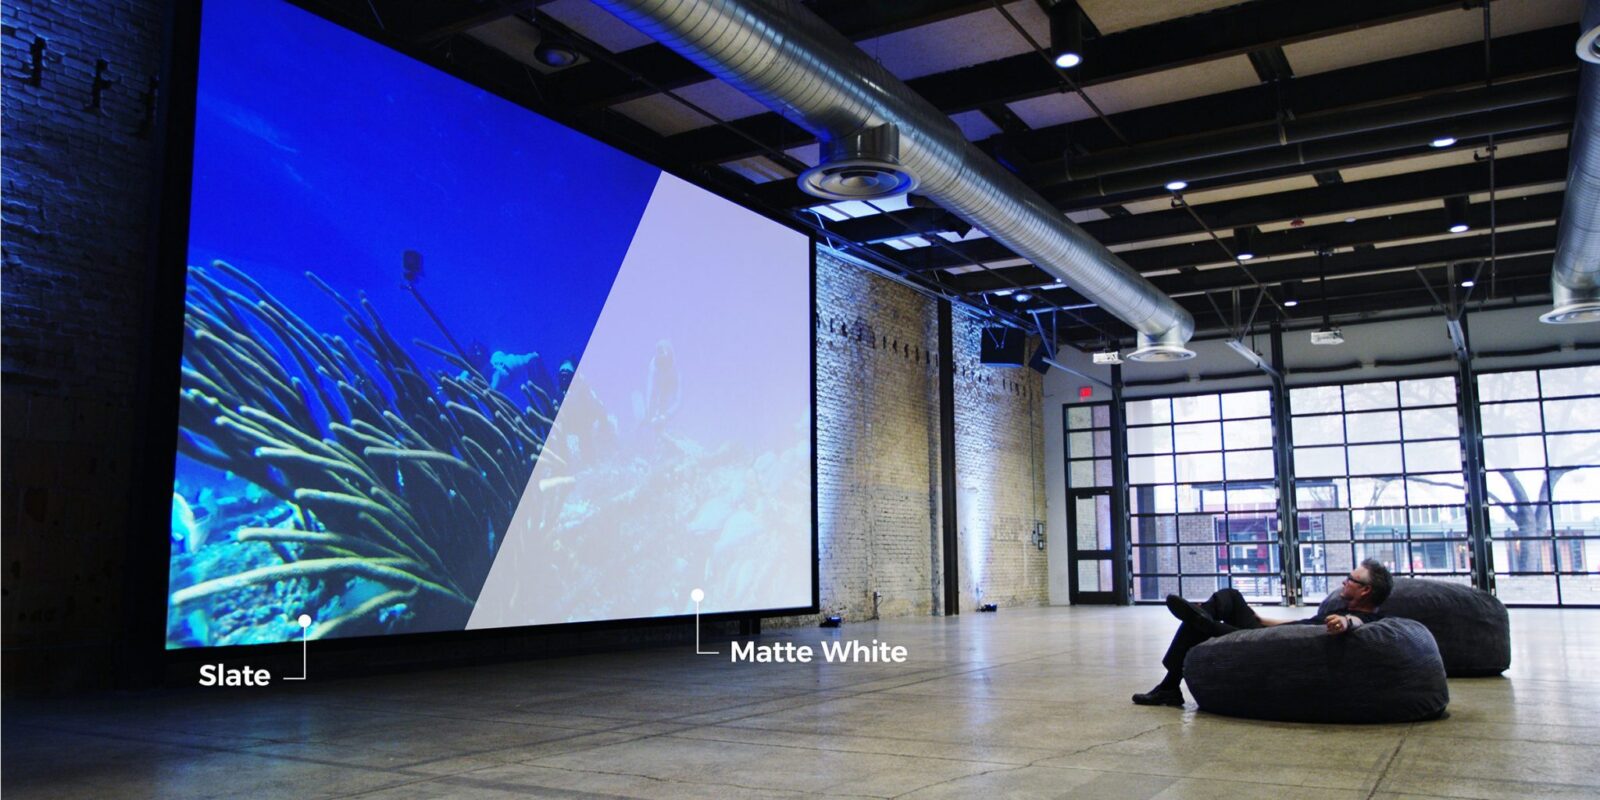 Projector Screens ALR vs Matt White